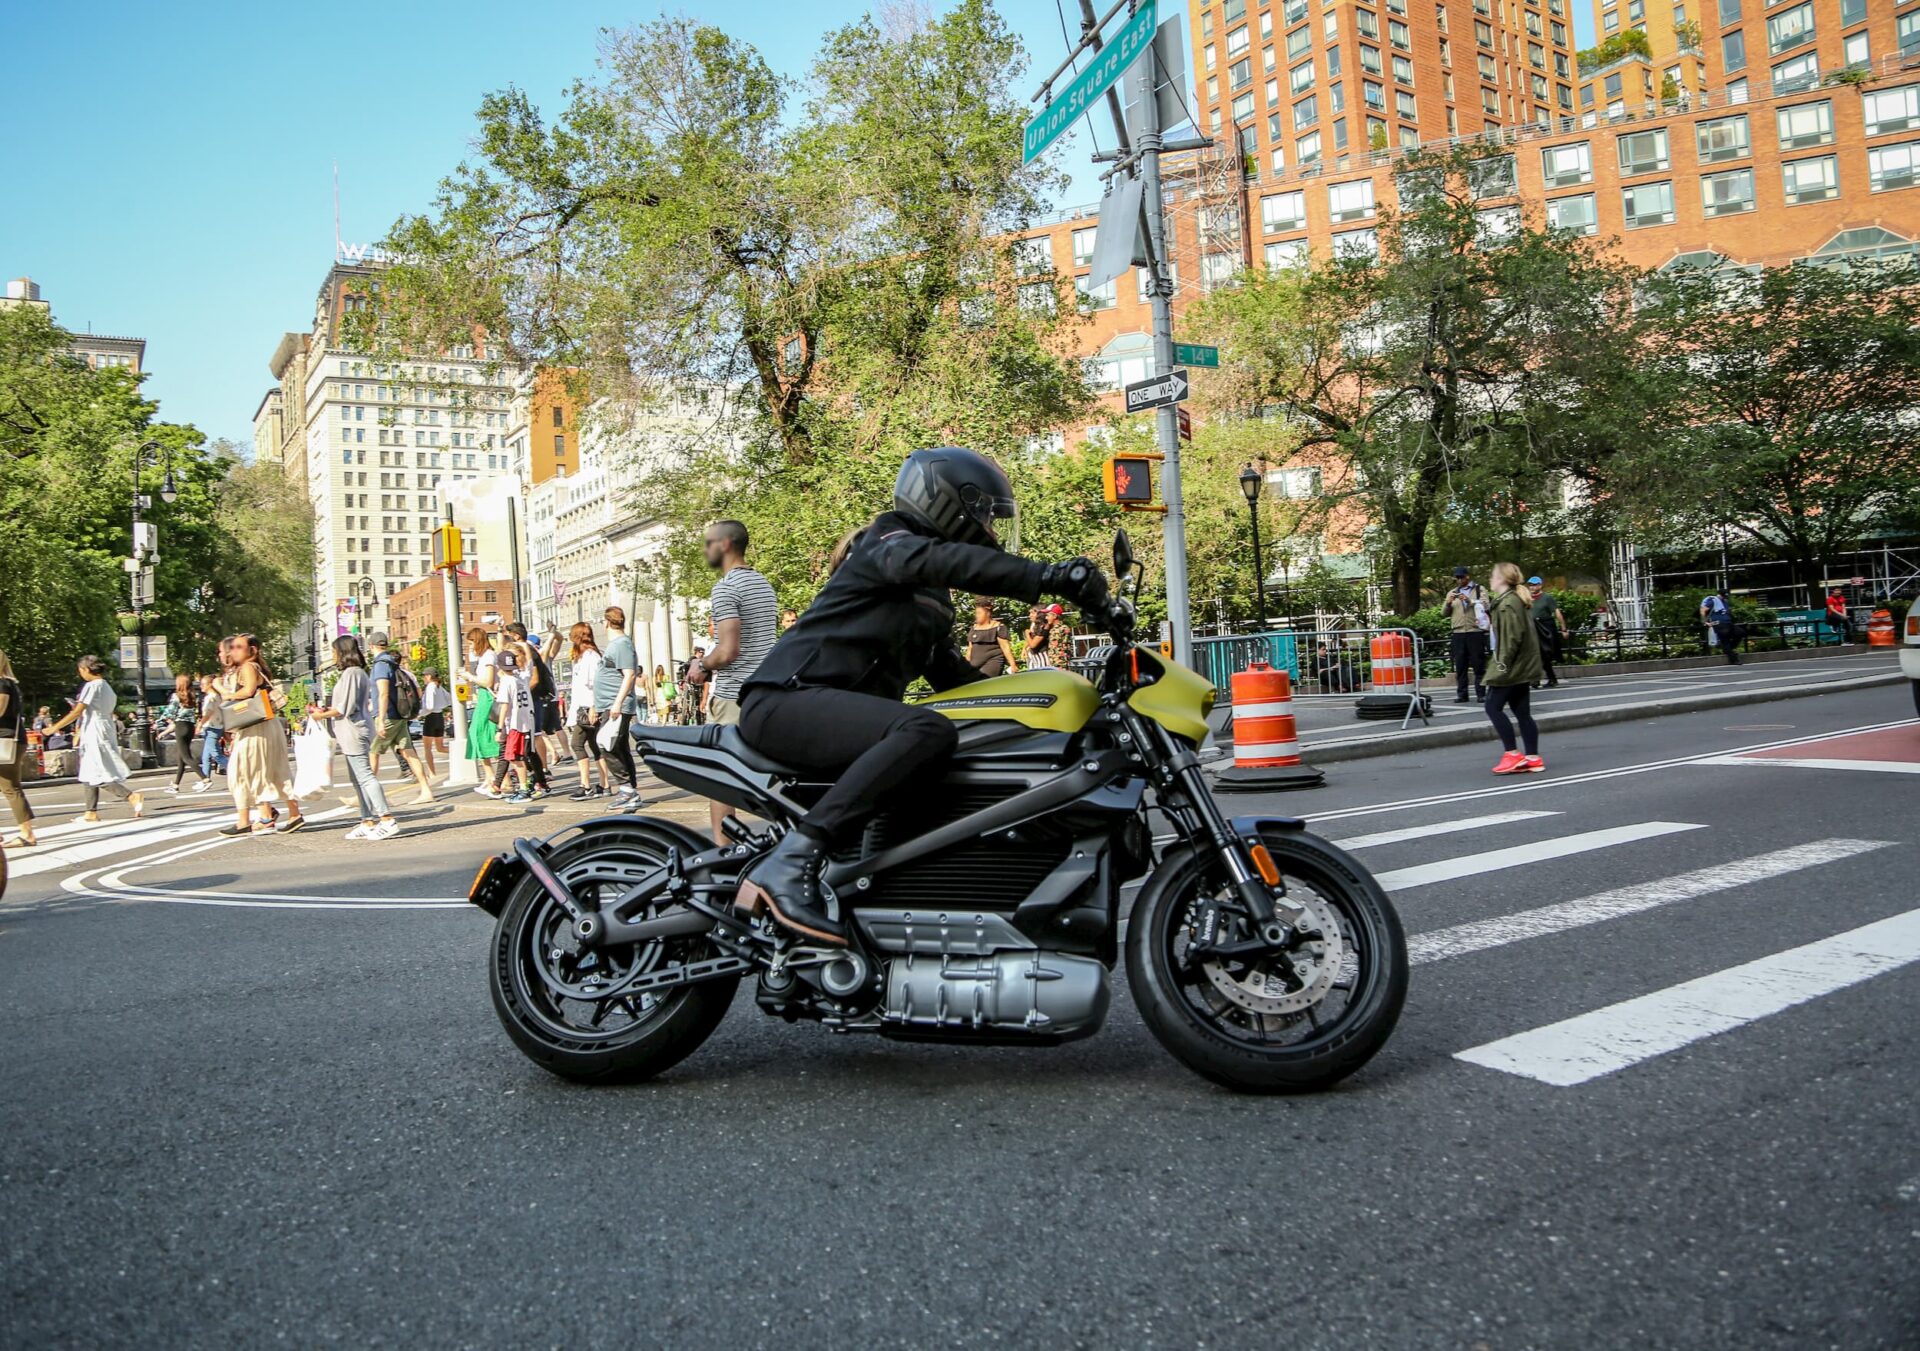 - Er elektriske motorcykler fremtiden?